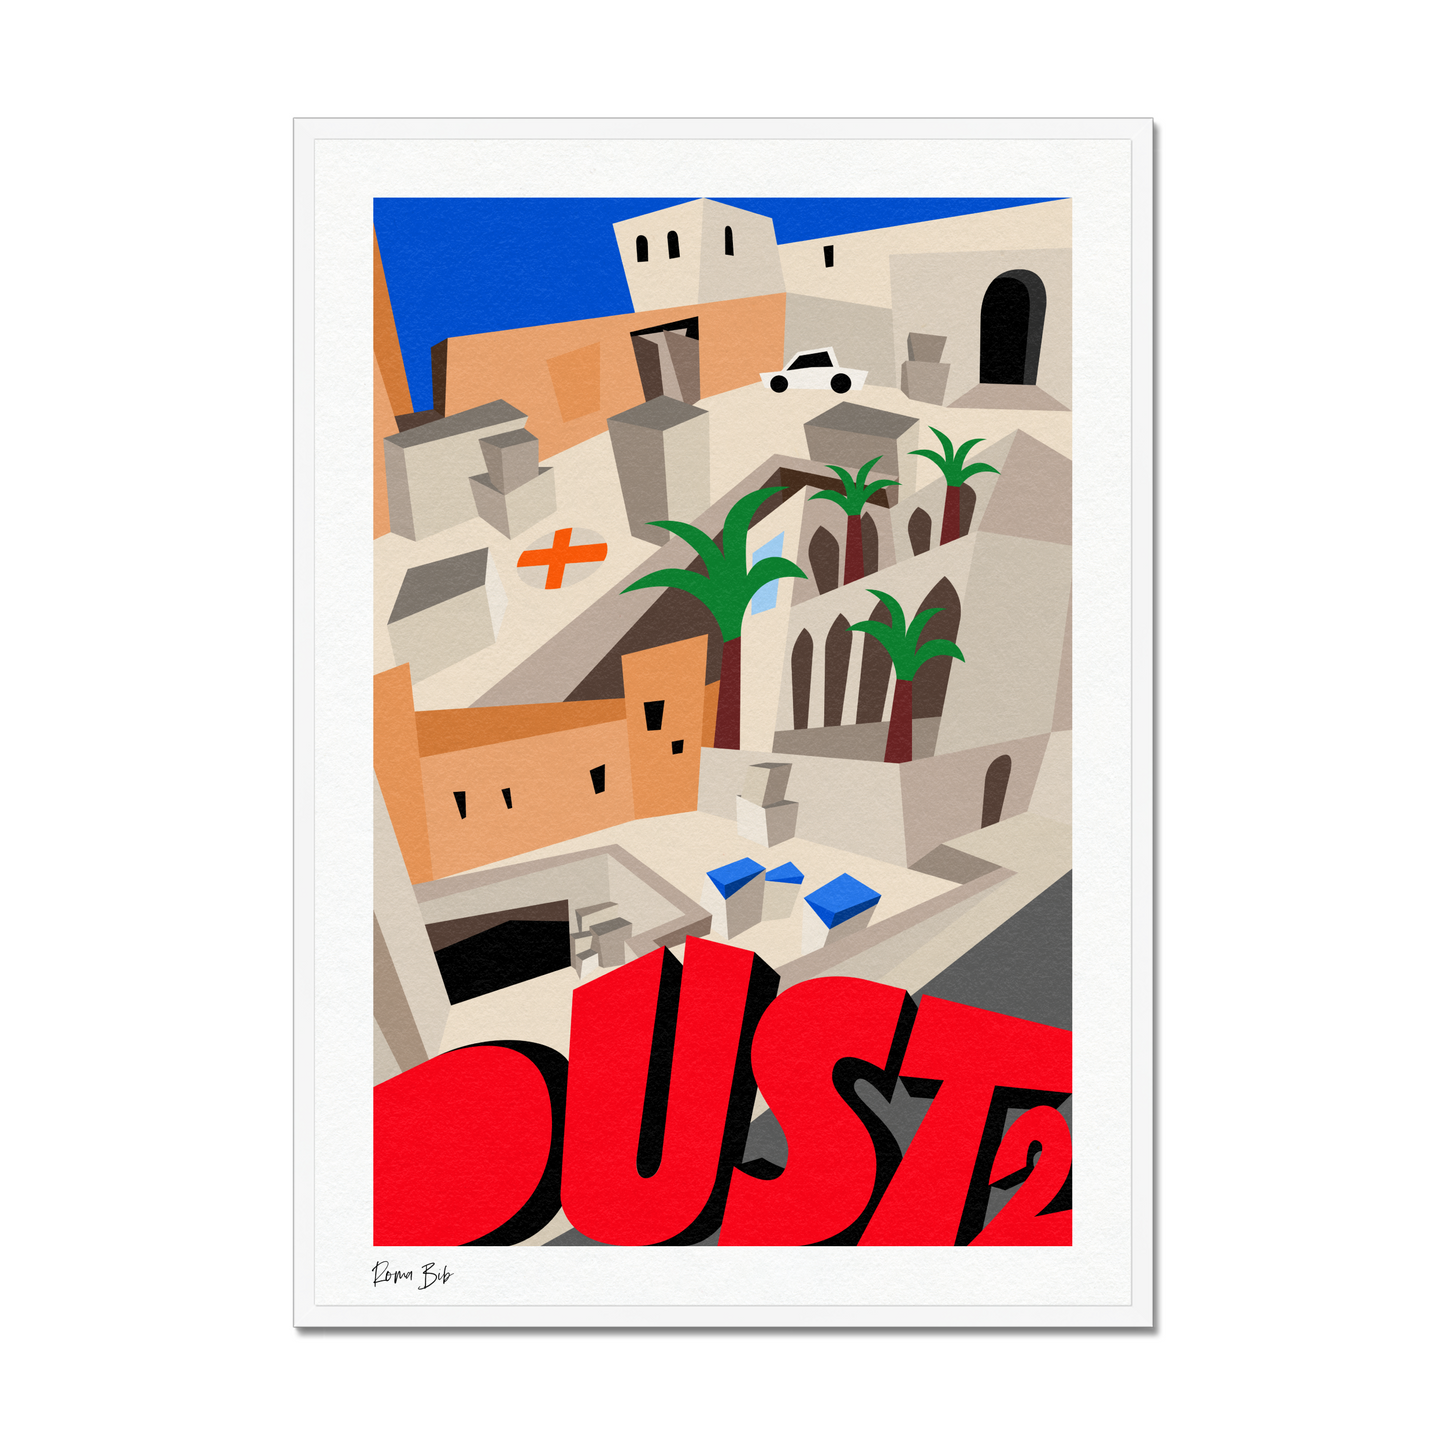 Counter Cubes: Dust 2 Framed Print